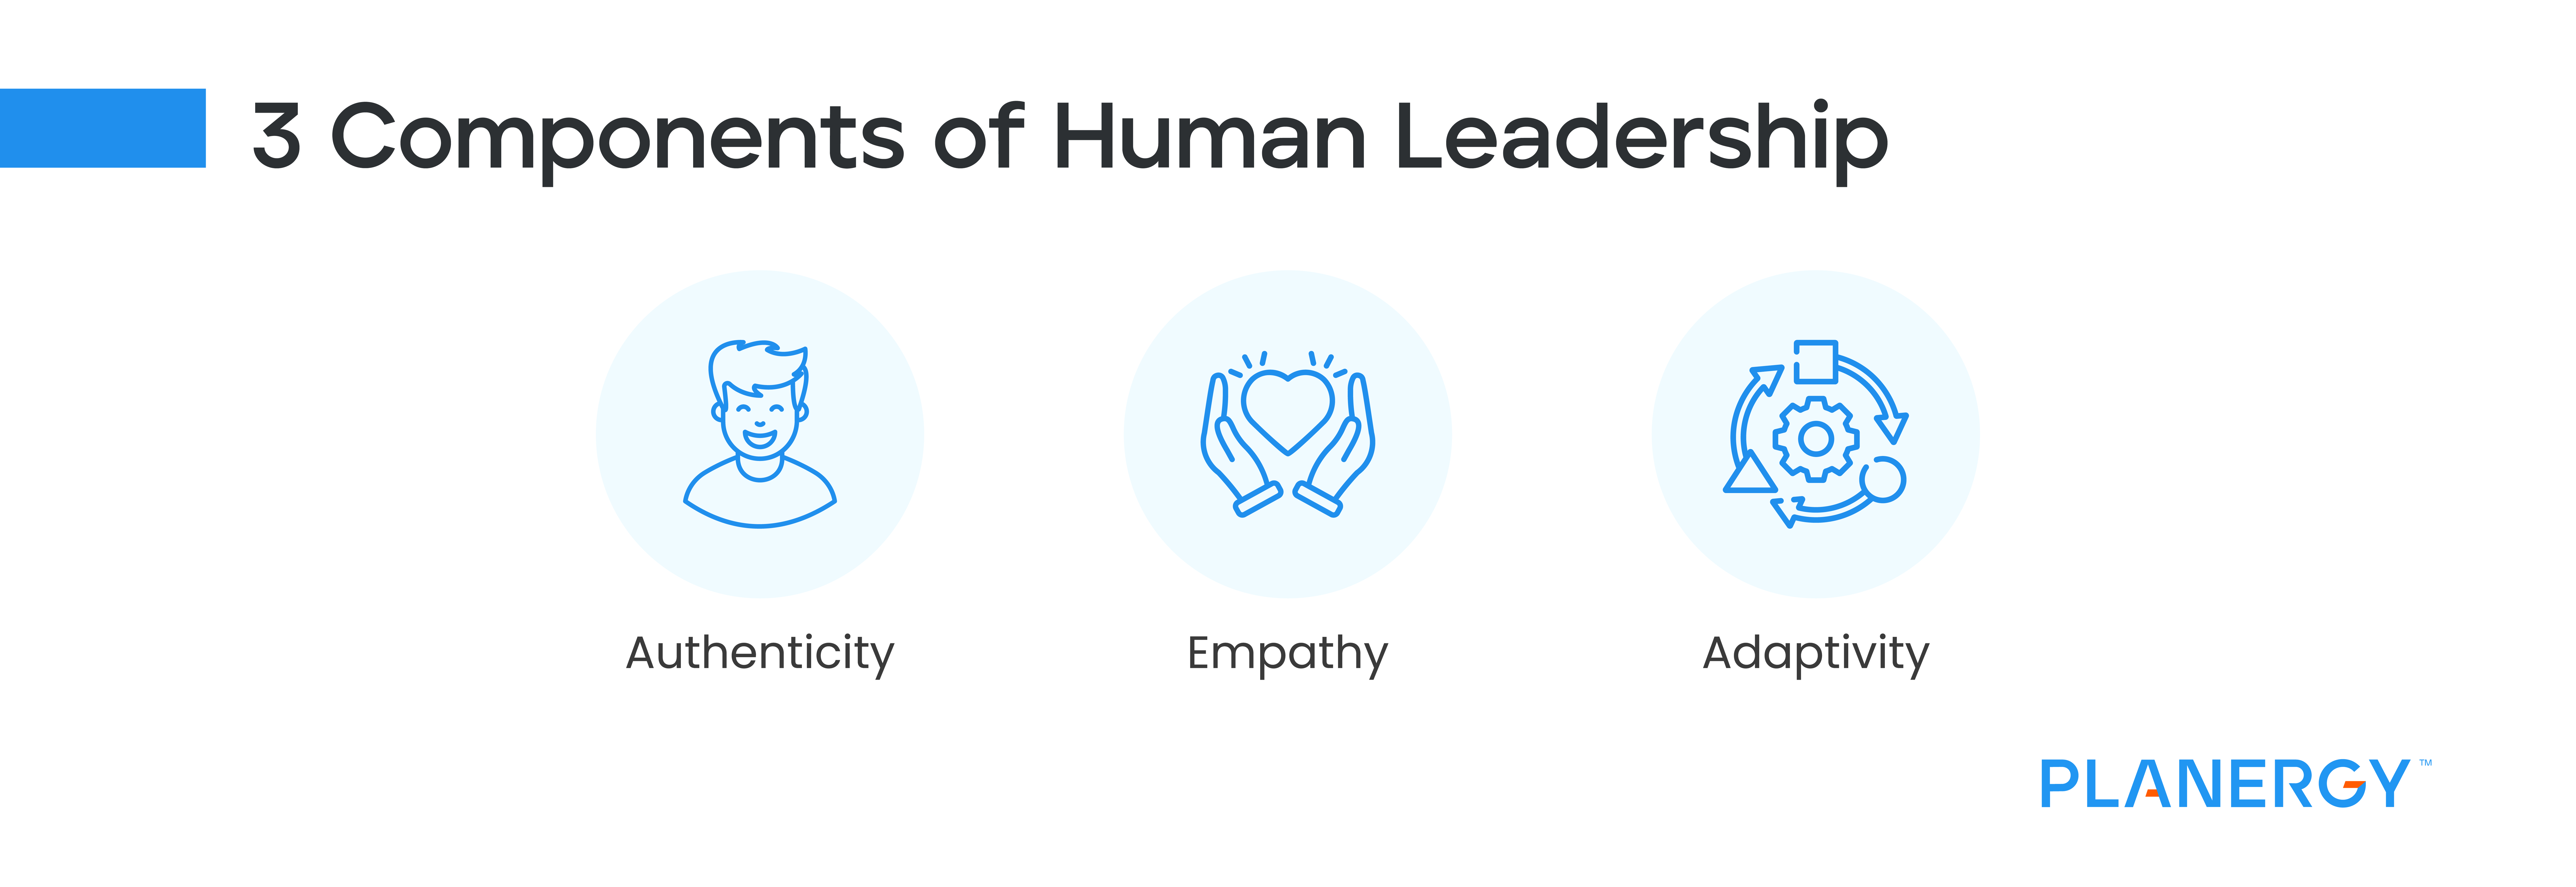 3 Components of Human Leadership